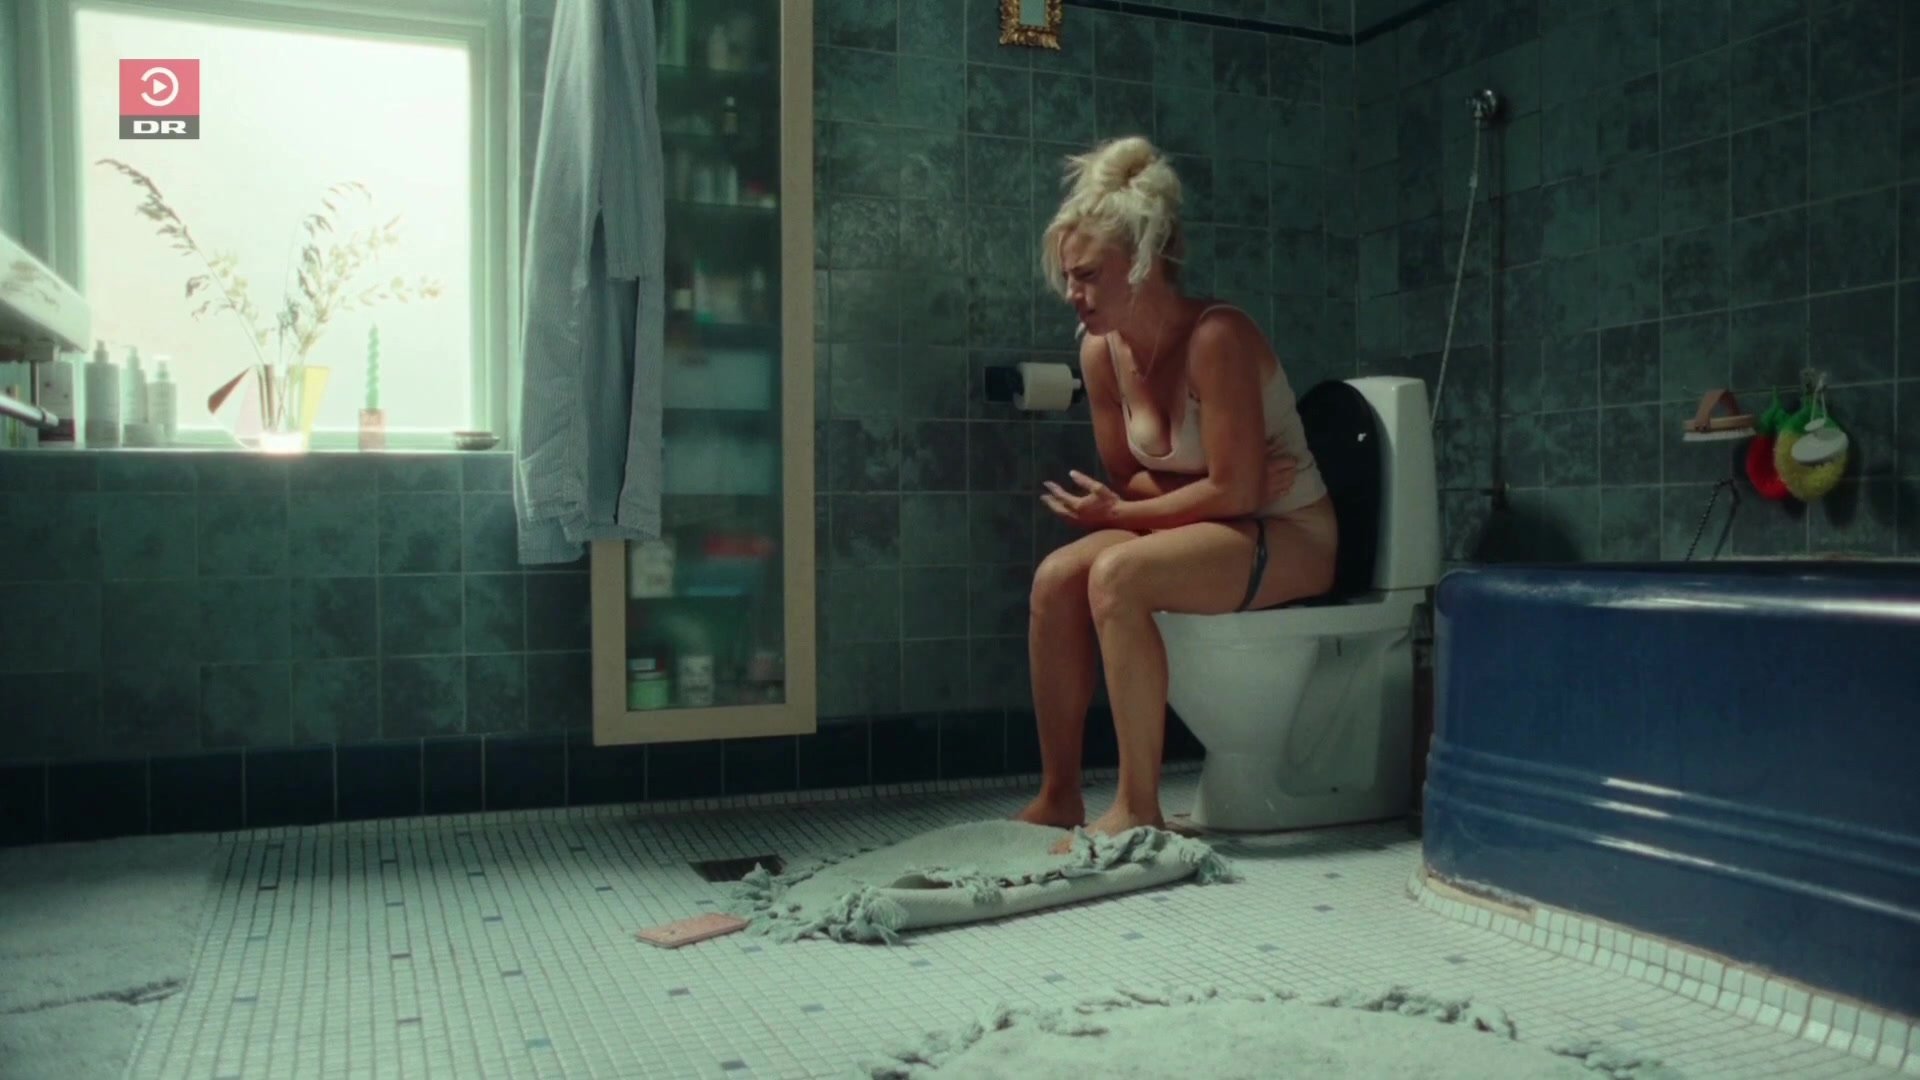 Hot girl toilet diarrhea farting scene - video 9 - ThisVid.com